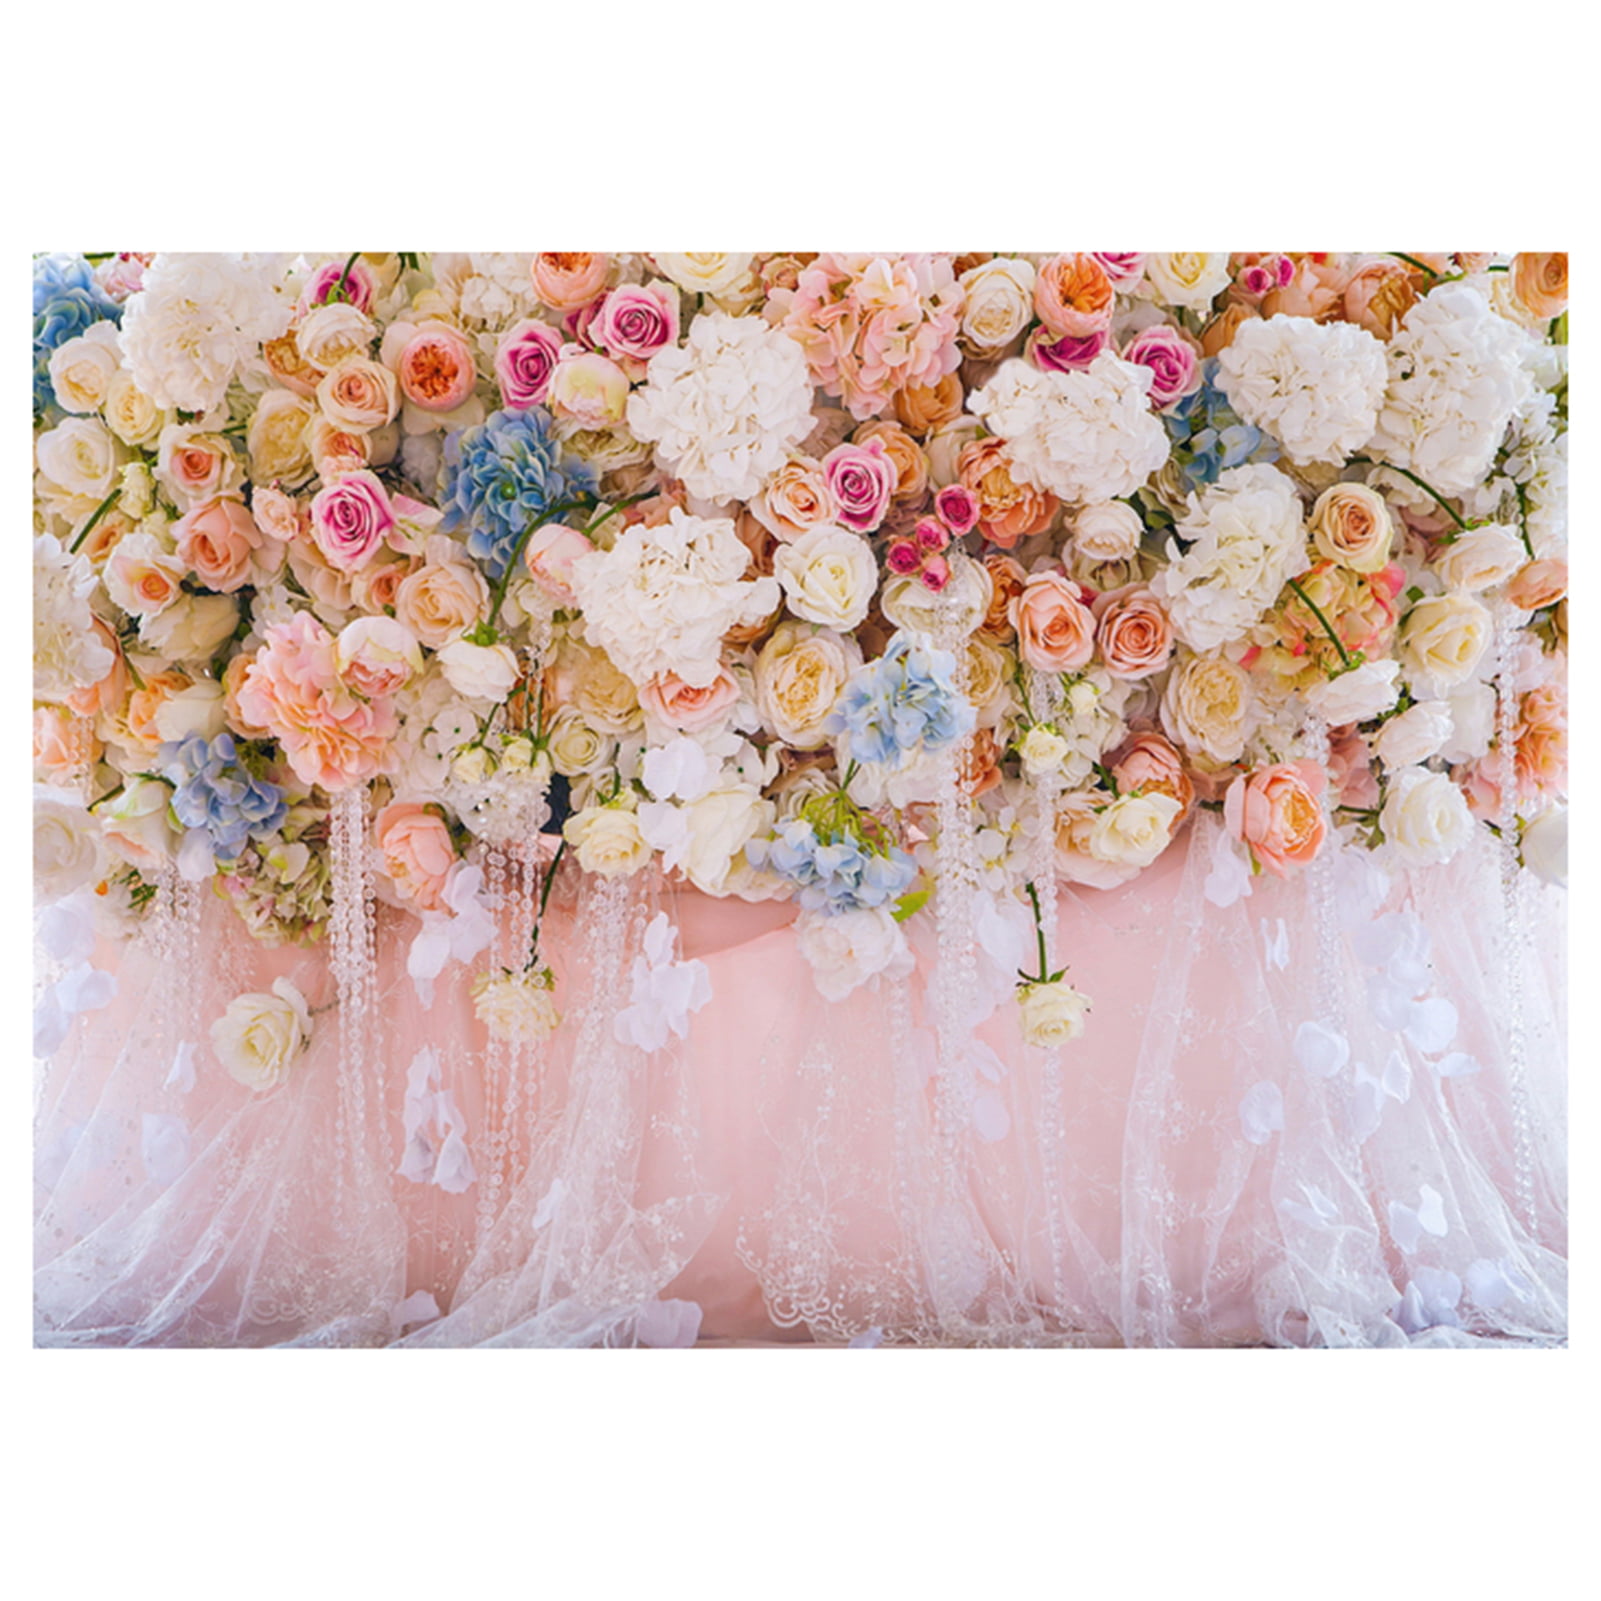 Yesbay 3D Flower Wedding Scene Photographic Backdrops Photo Studio  Background Decor,200*300cm 2 